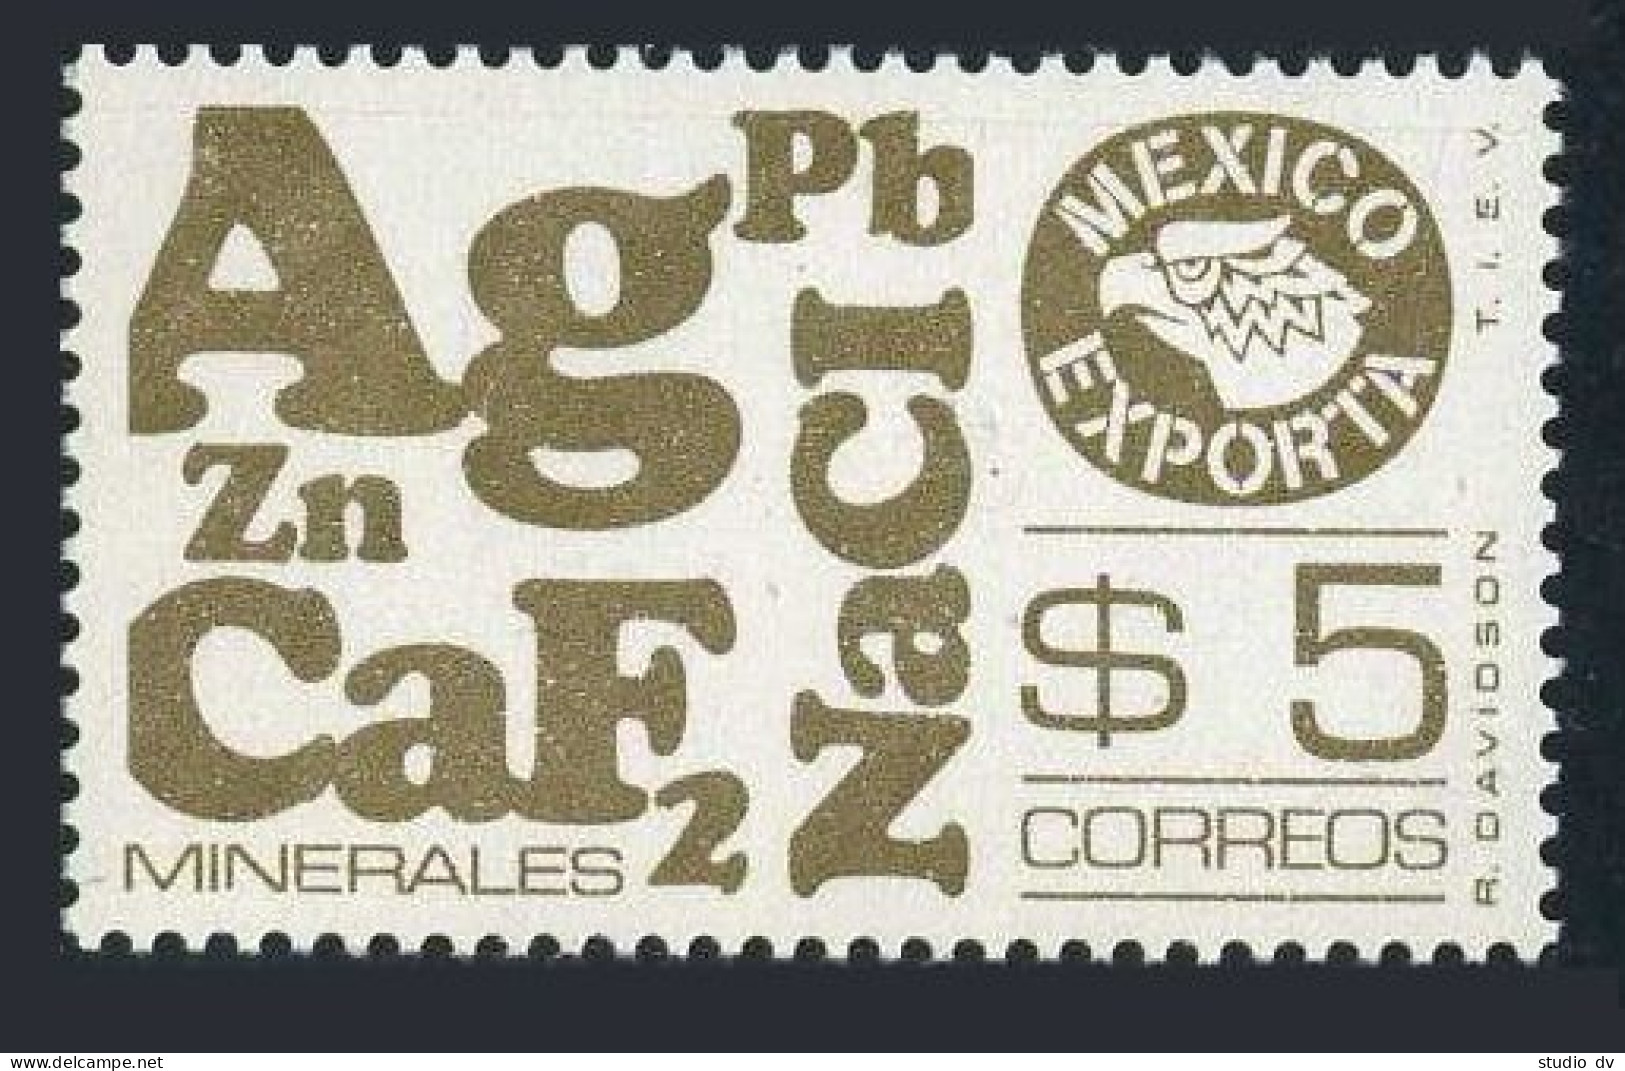 Mexico 1120 Perf 14,MNH.Michel 1496. Mexico Exports,1978.Minerals. - Mexico